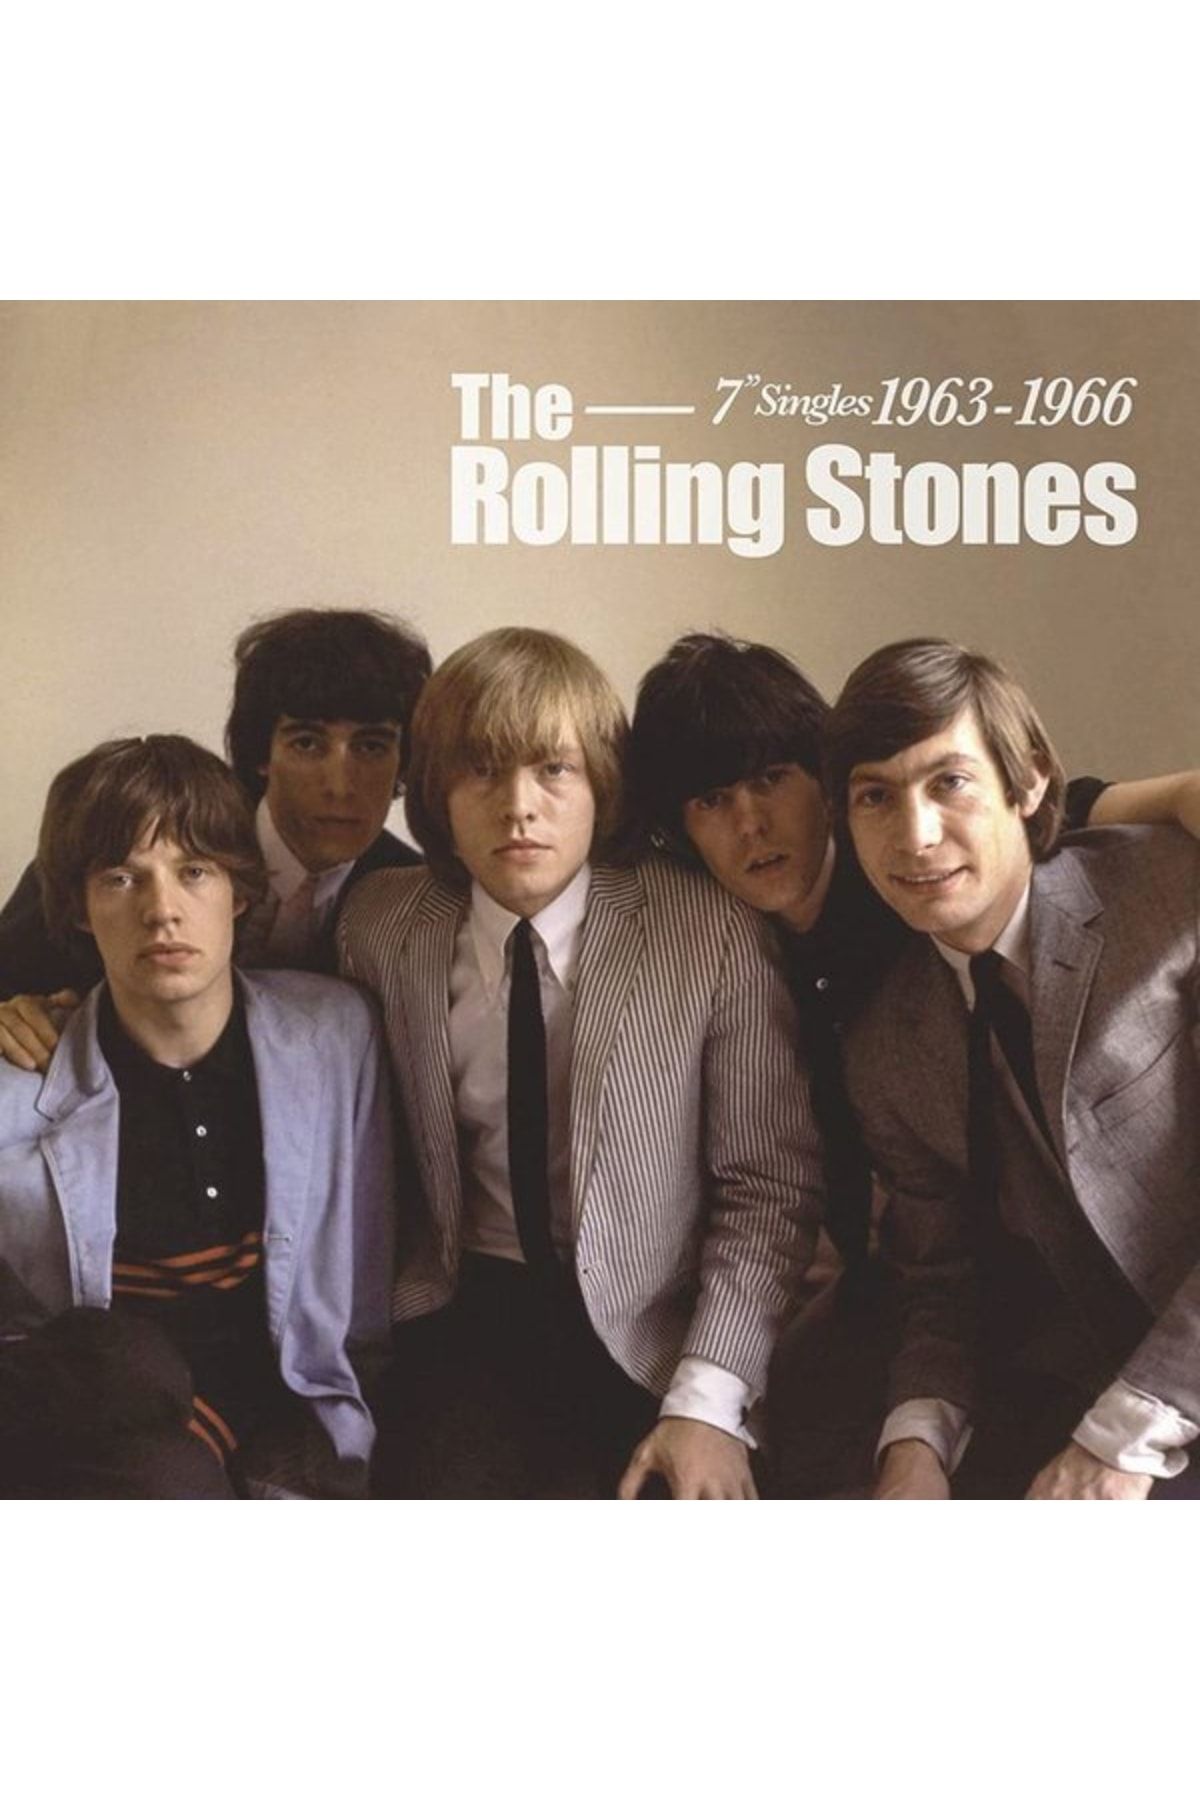 ABK Ticaret The Rolling Stones – 7" Singles 1963-1966 Box Set, Compilation, Limited Edition